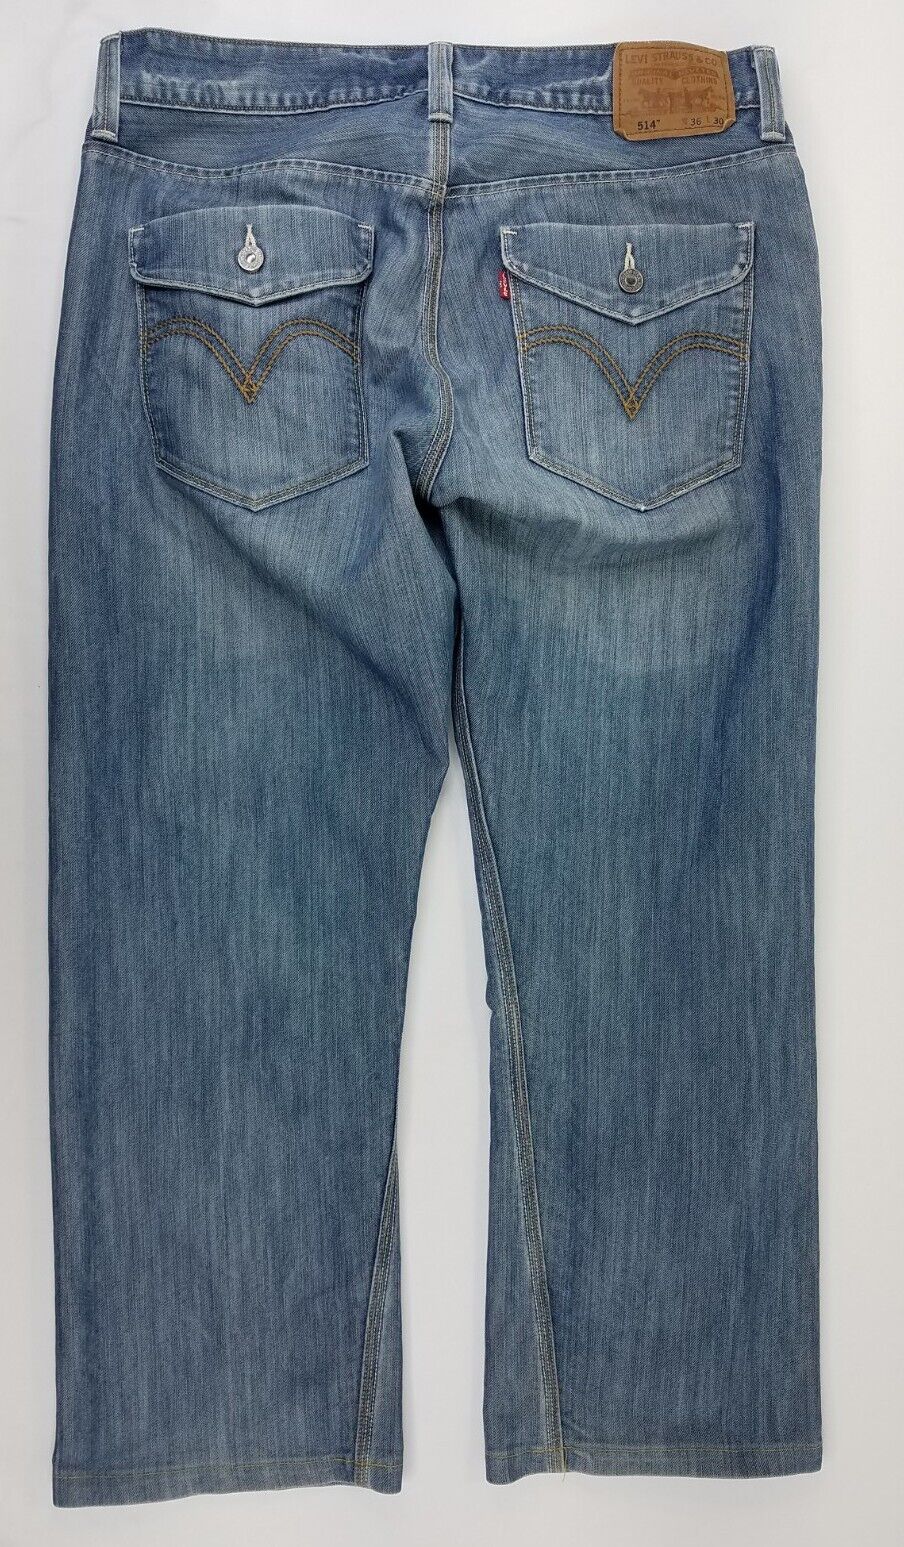 Levis 514 Jeans Mens Size 36 x 28 Slim Straight Fit Light Wash Denim Blue  B52